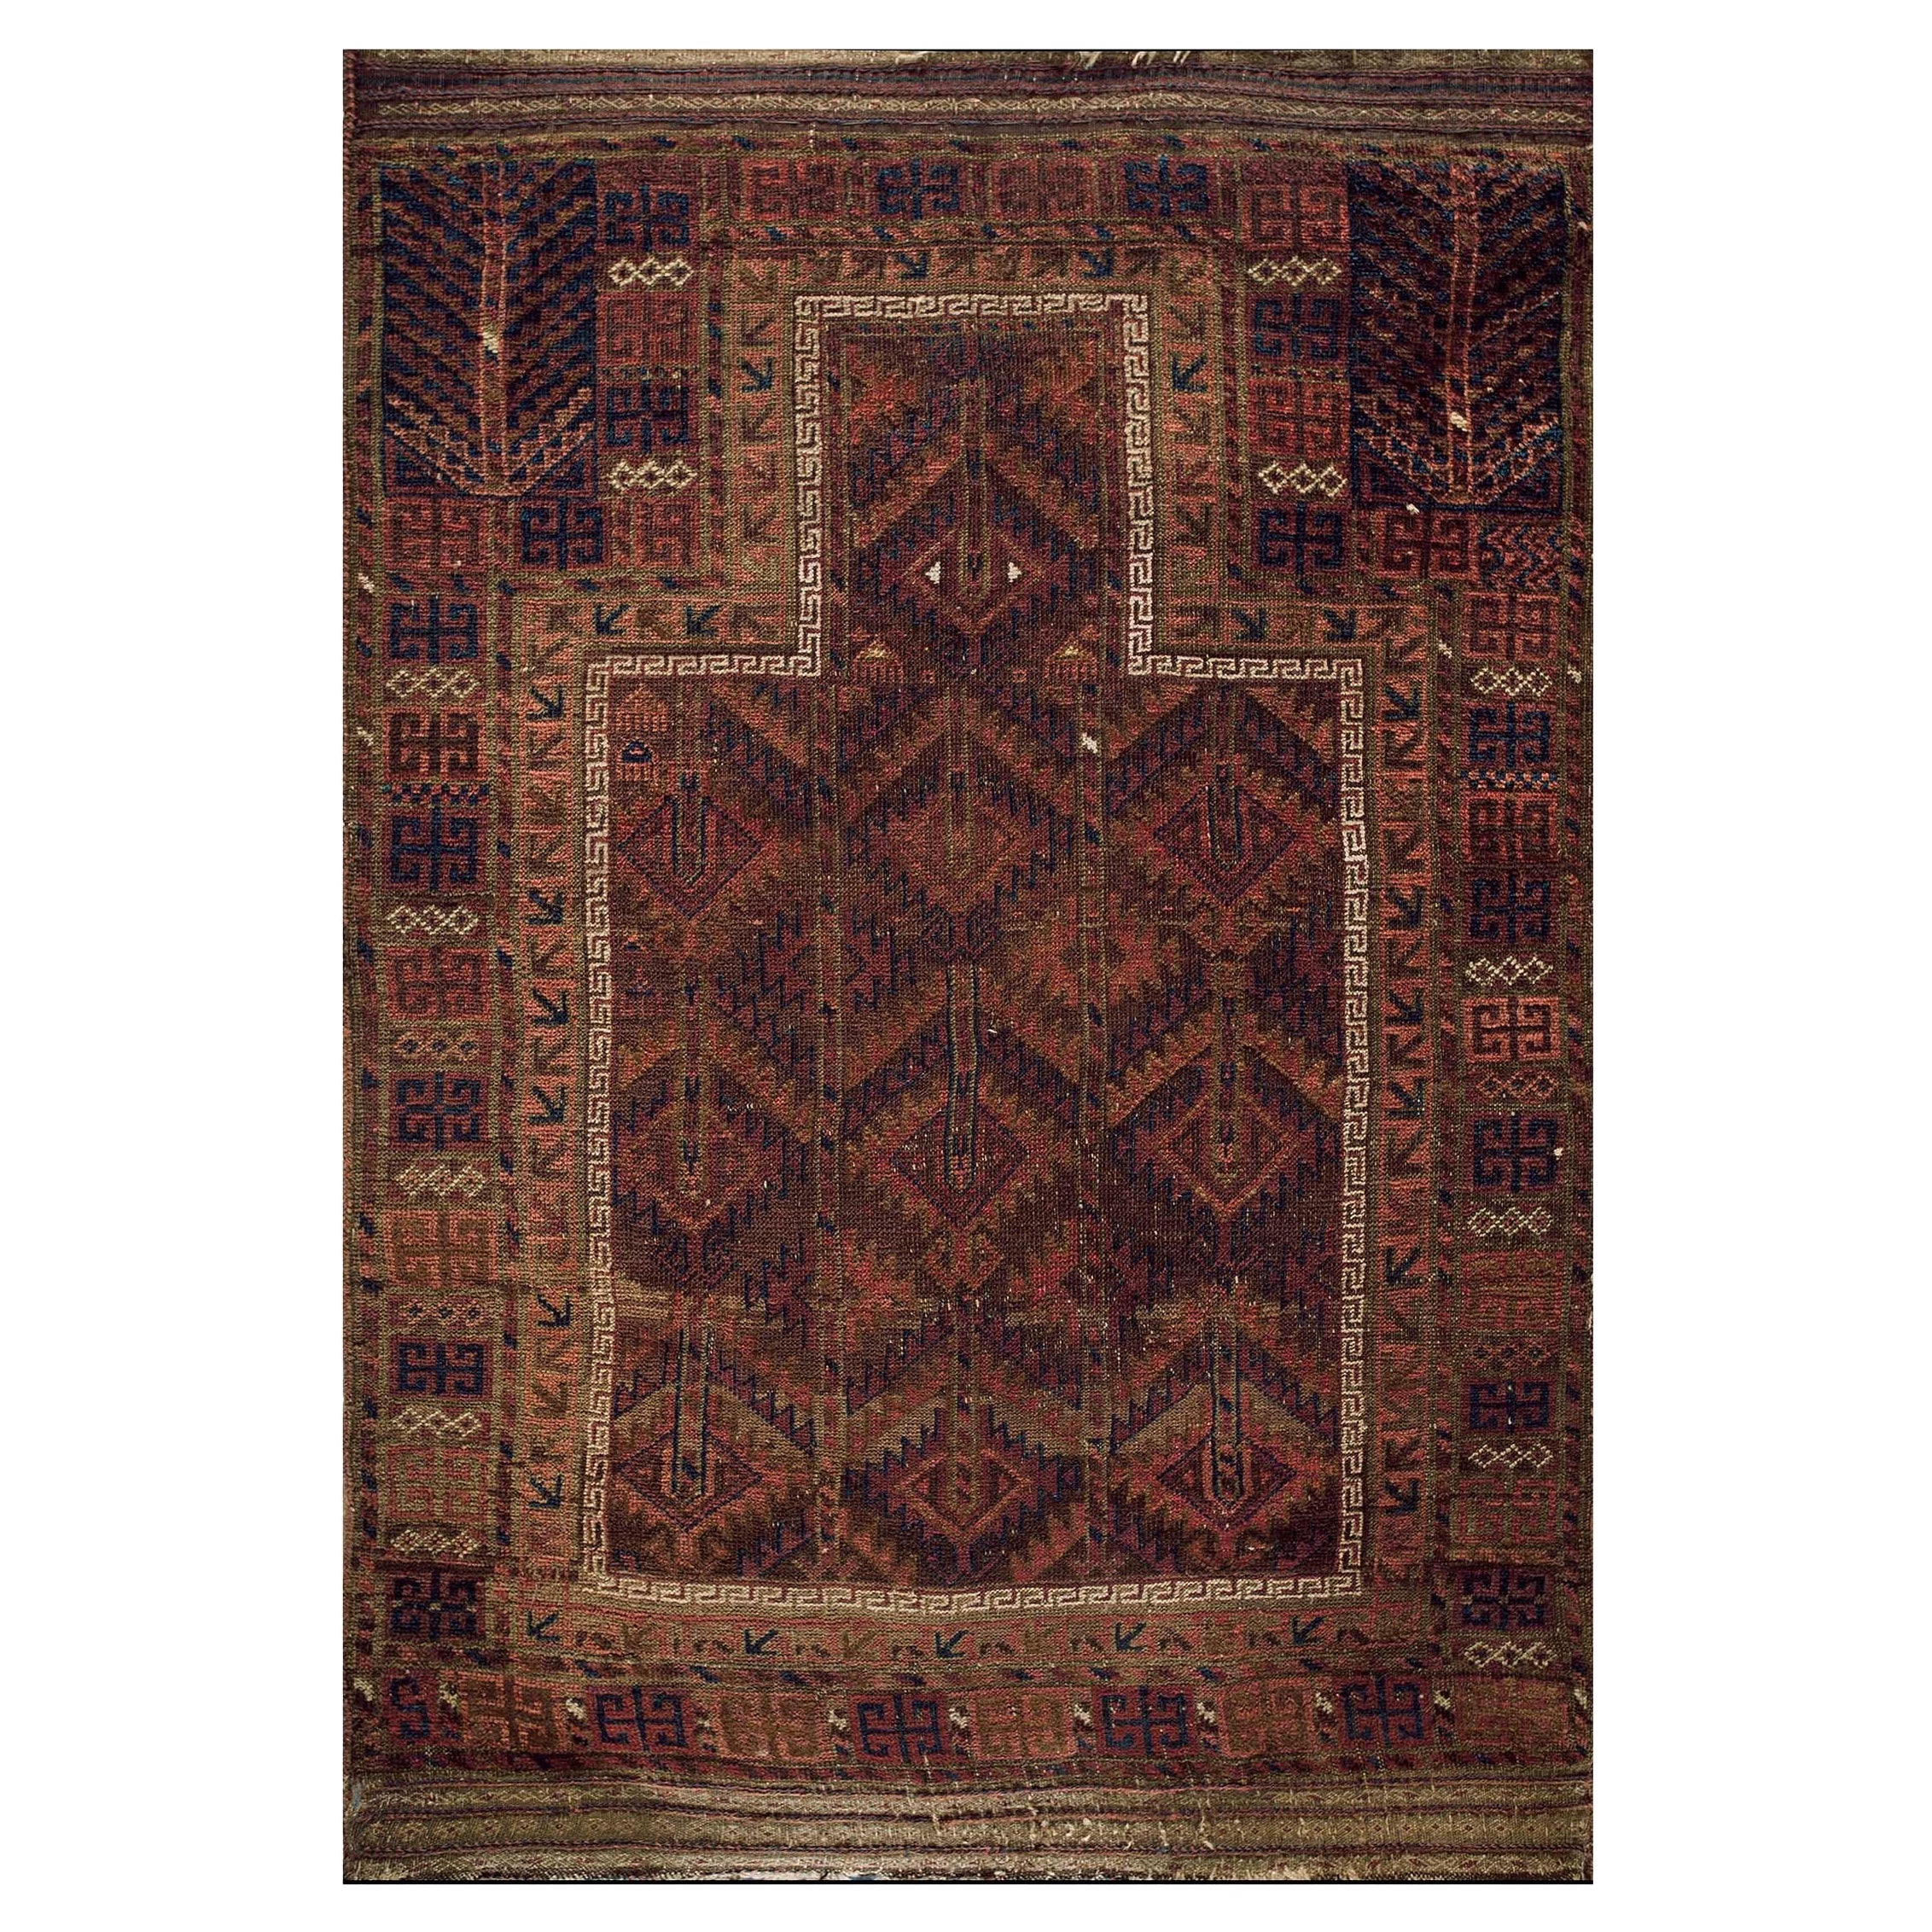 19th Century Persian Baluch Prayer Carpet ( 3' x 4' 6'' - 92 x 137 cm )